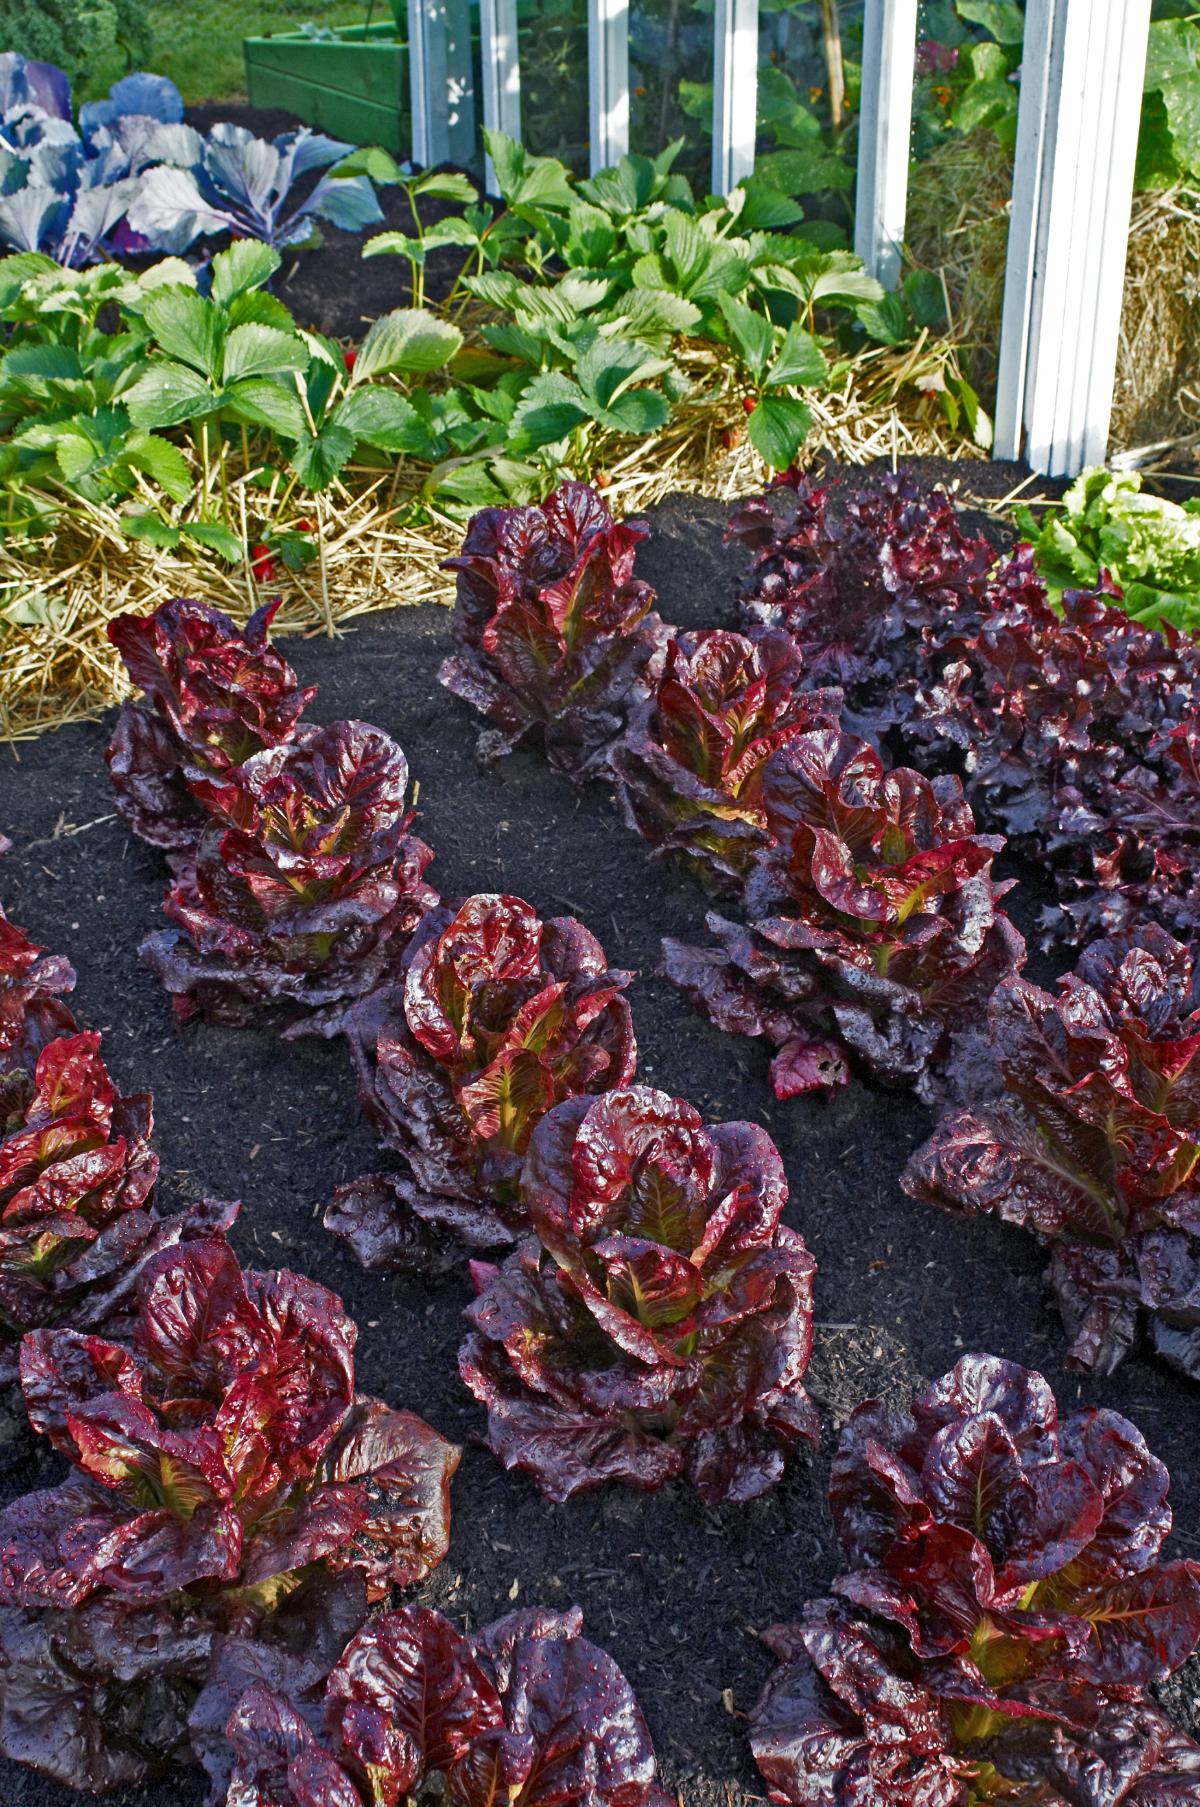 Red lettuce as foliage plant in an ornamental edible garden